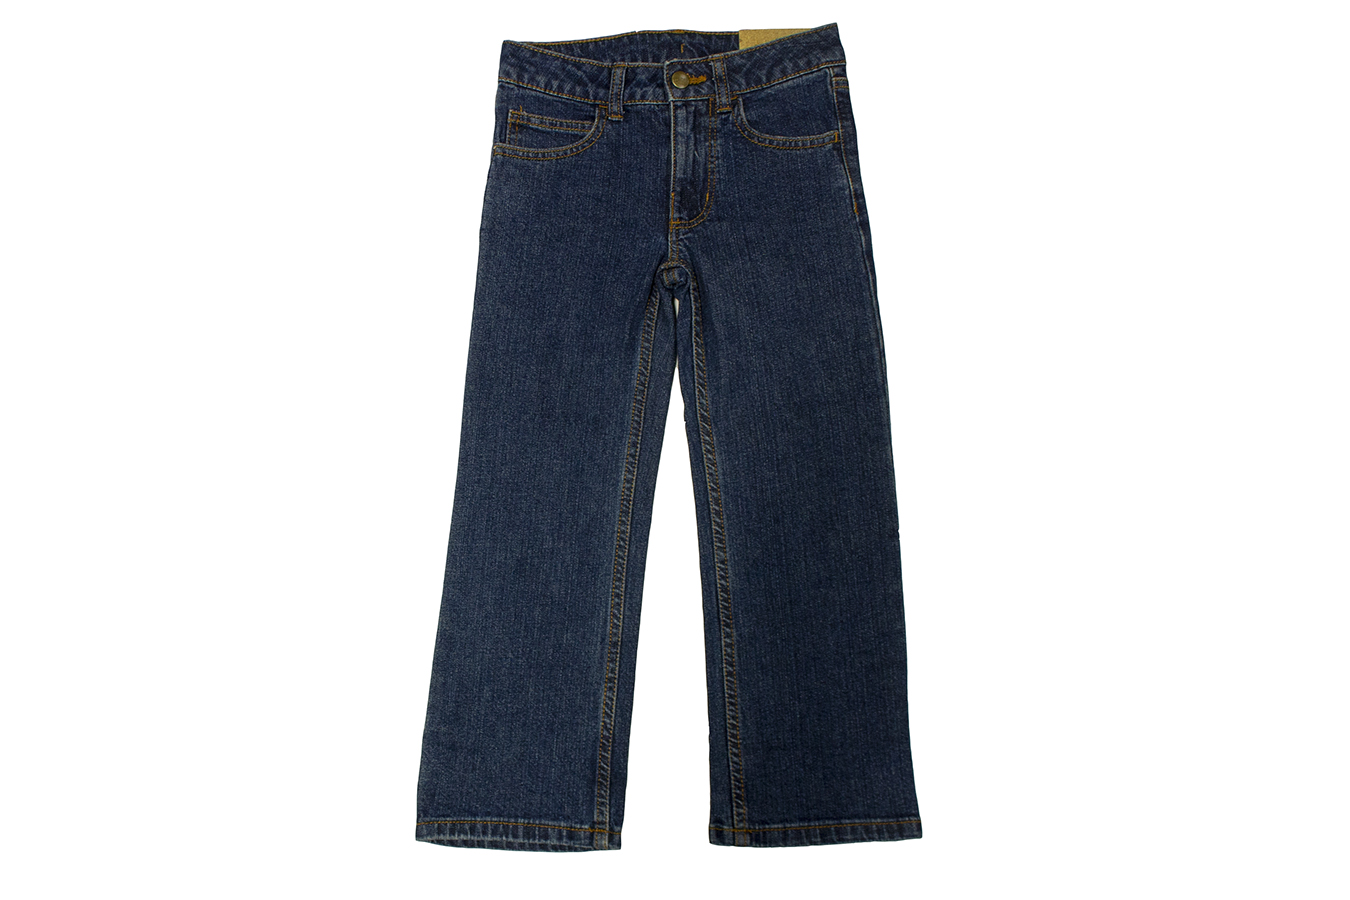 Shop Carhartt Kids Boys 5 Pocket Jean for Sale | Online Clothing Store ...